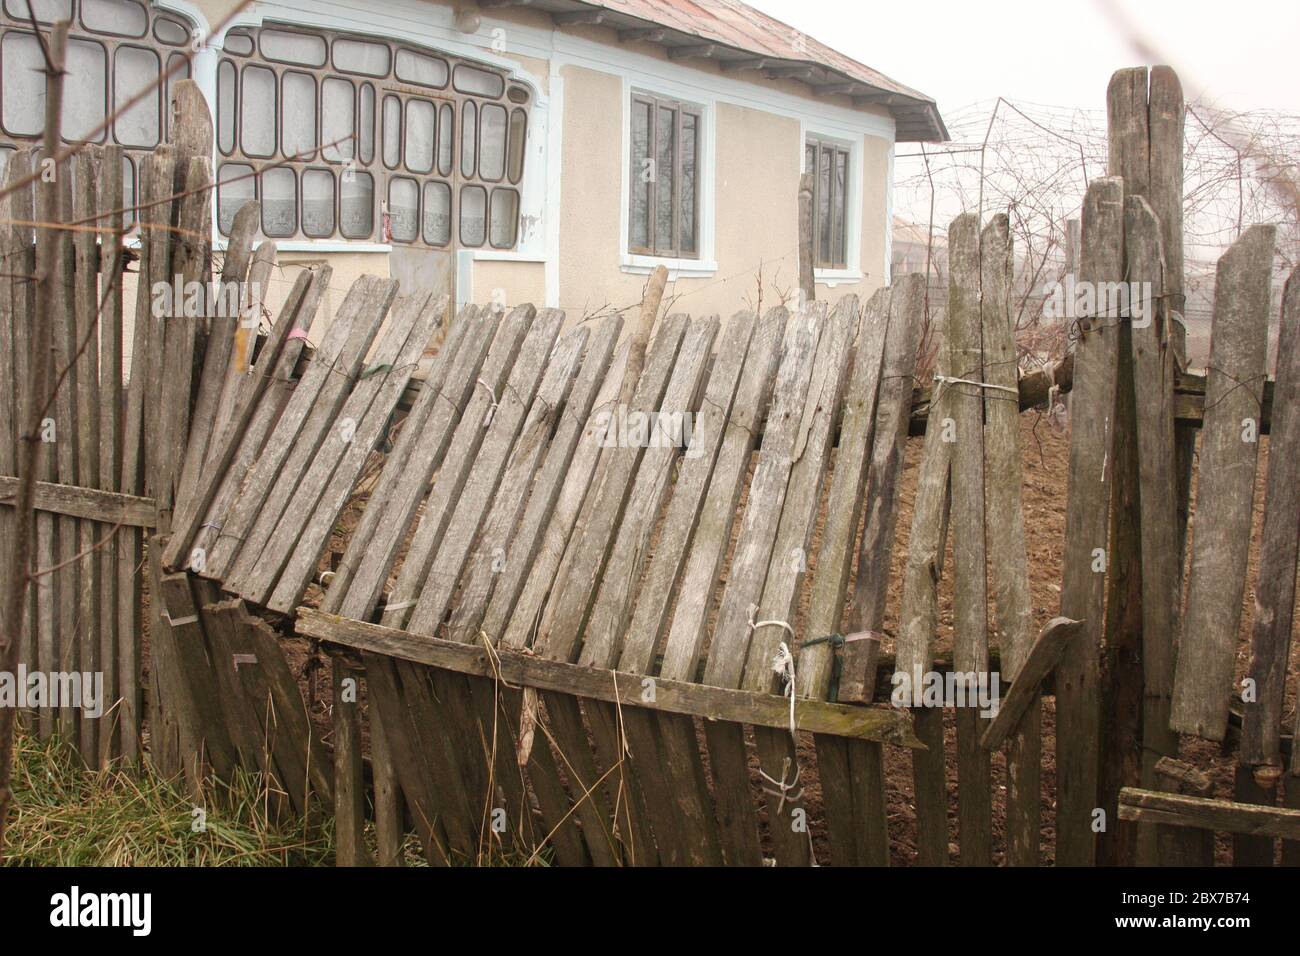 Broken wooden fence around a property in Silistea Gumesti, Romania Stock Photo